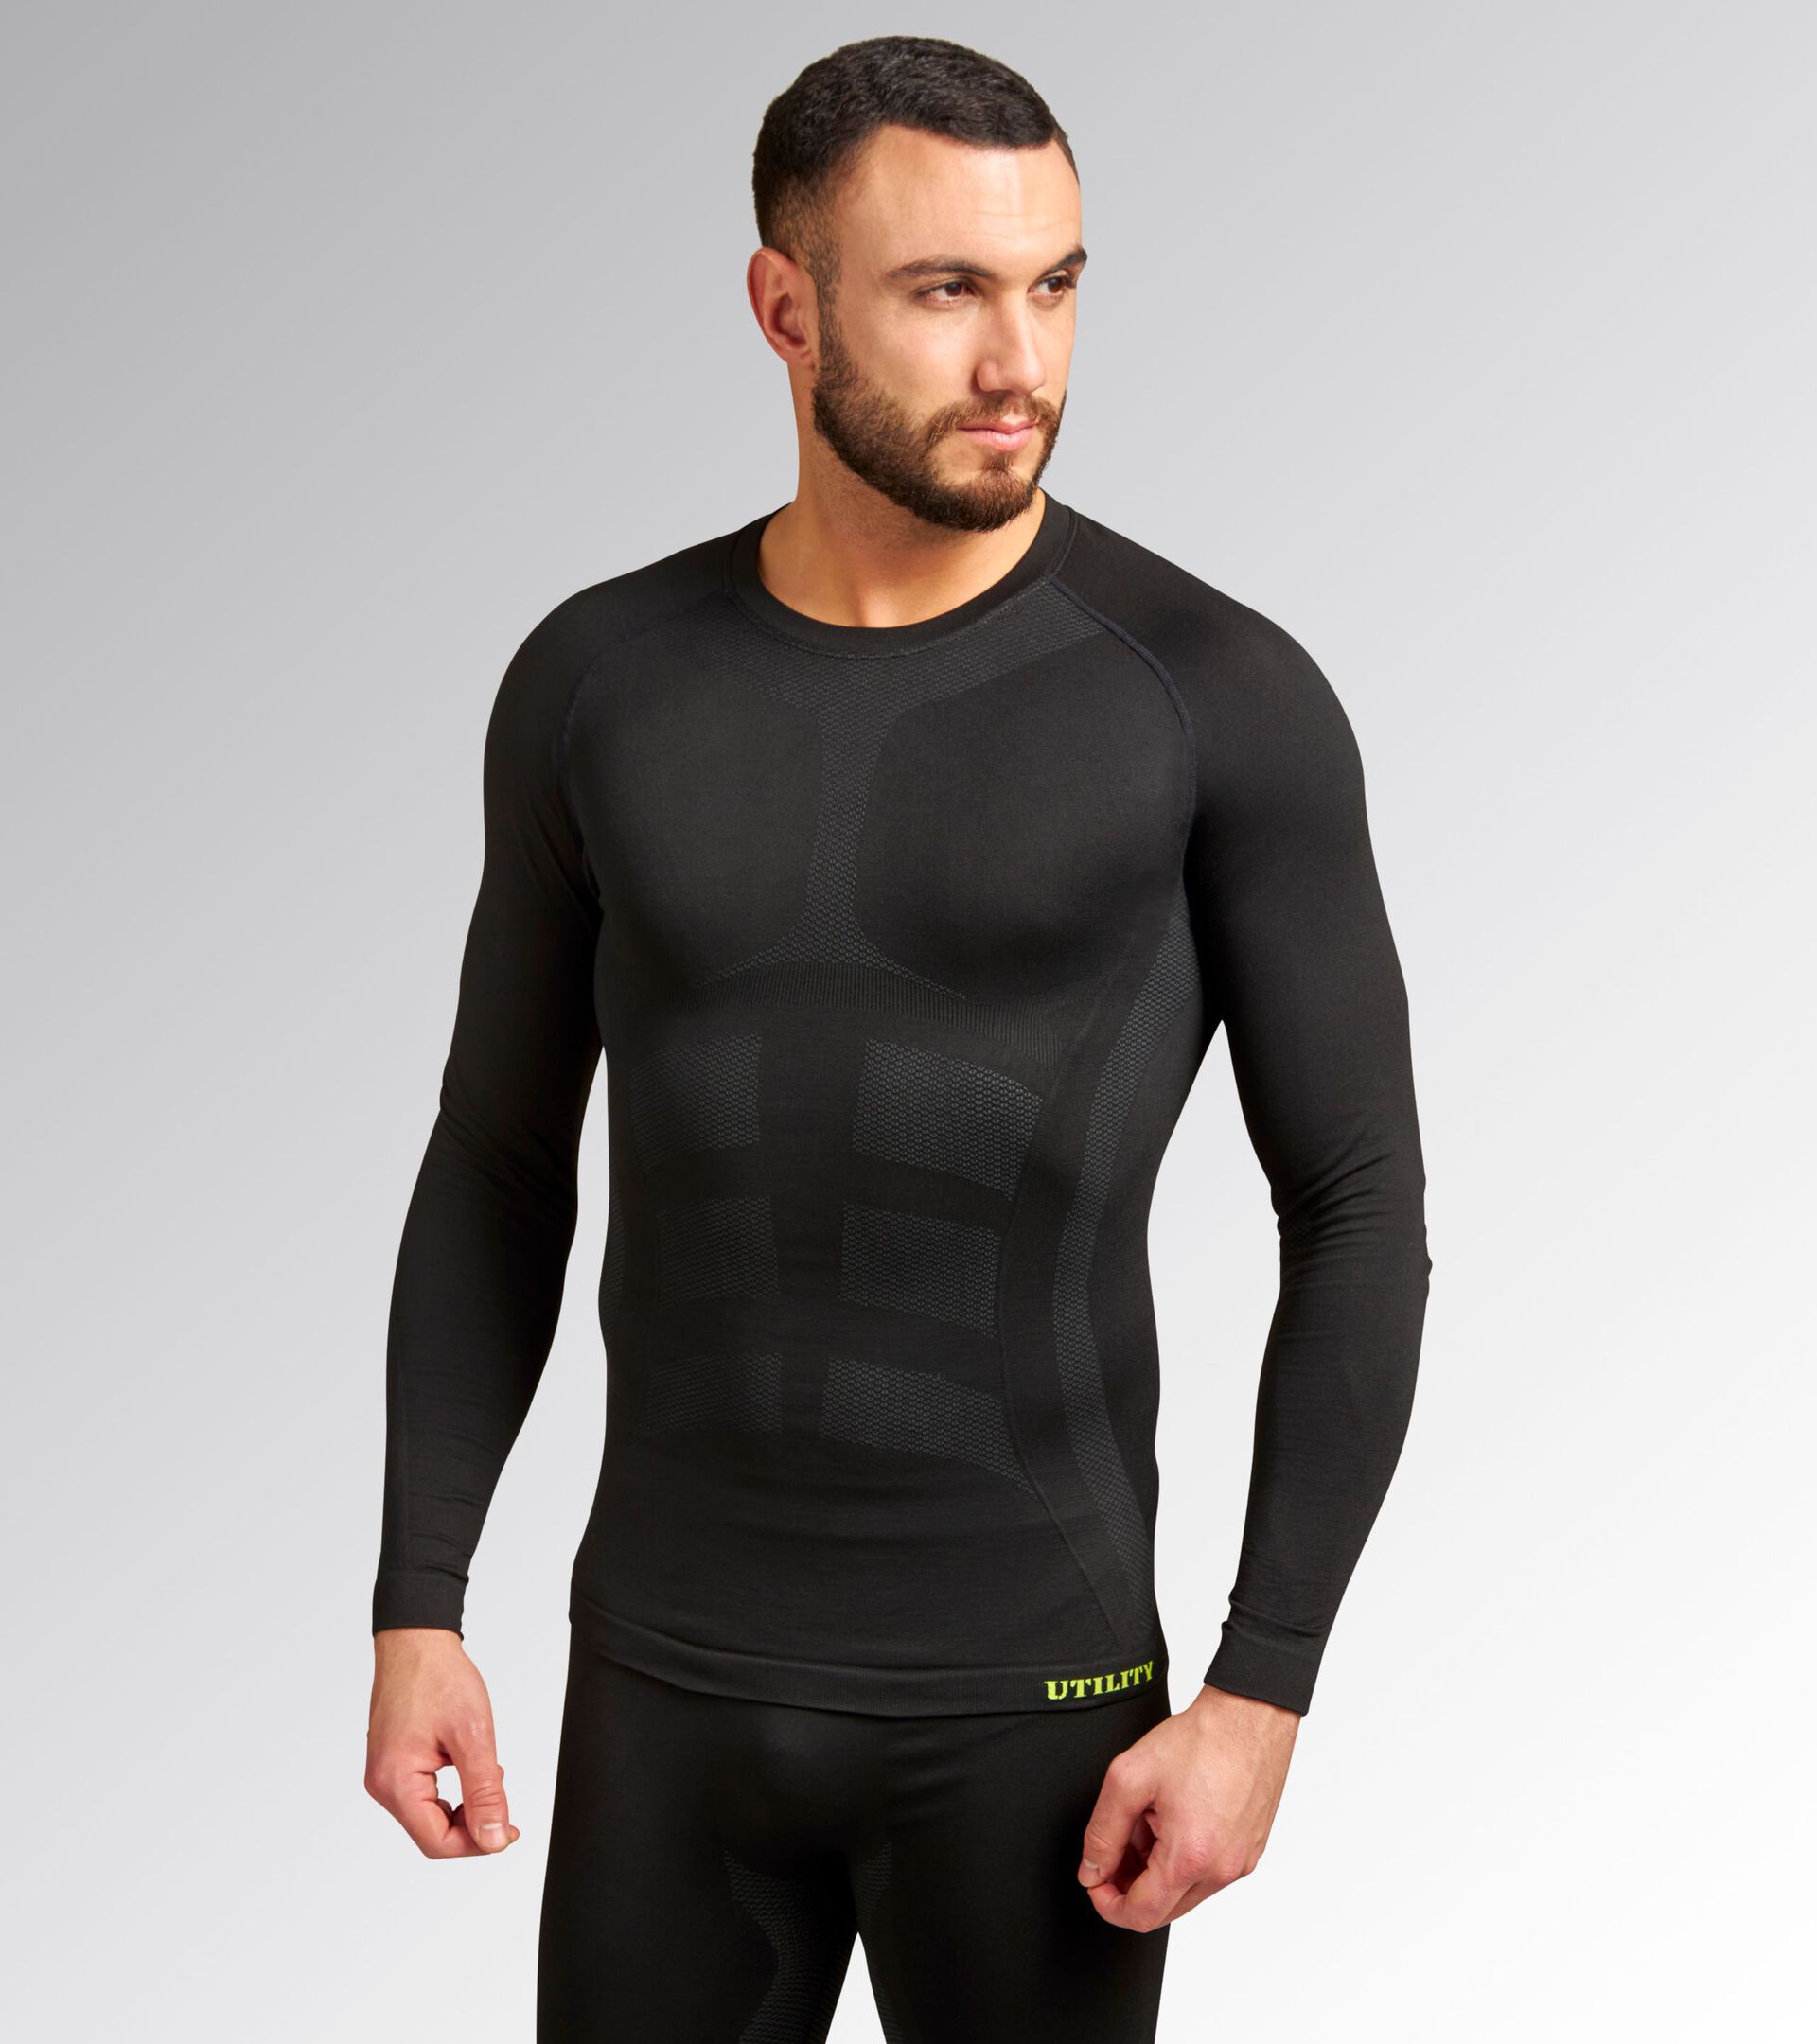 Underwear - Long-sleeved seamless top TOP SEAMLESS EVO BLACK - Utility